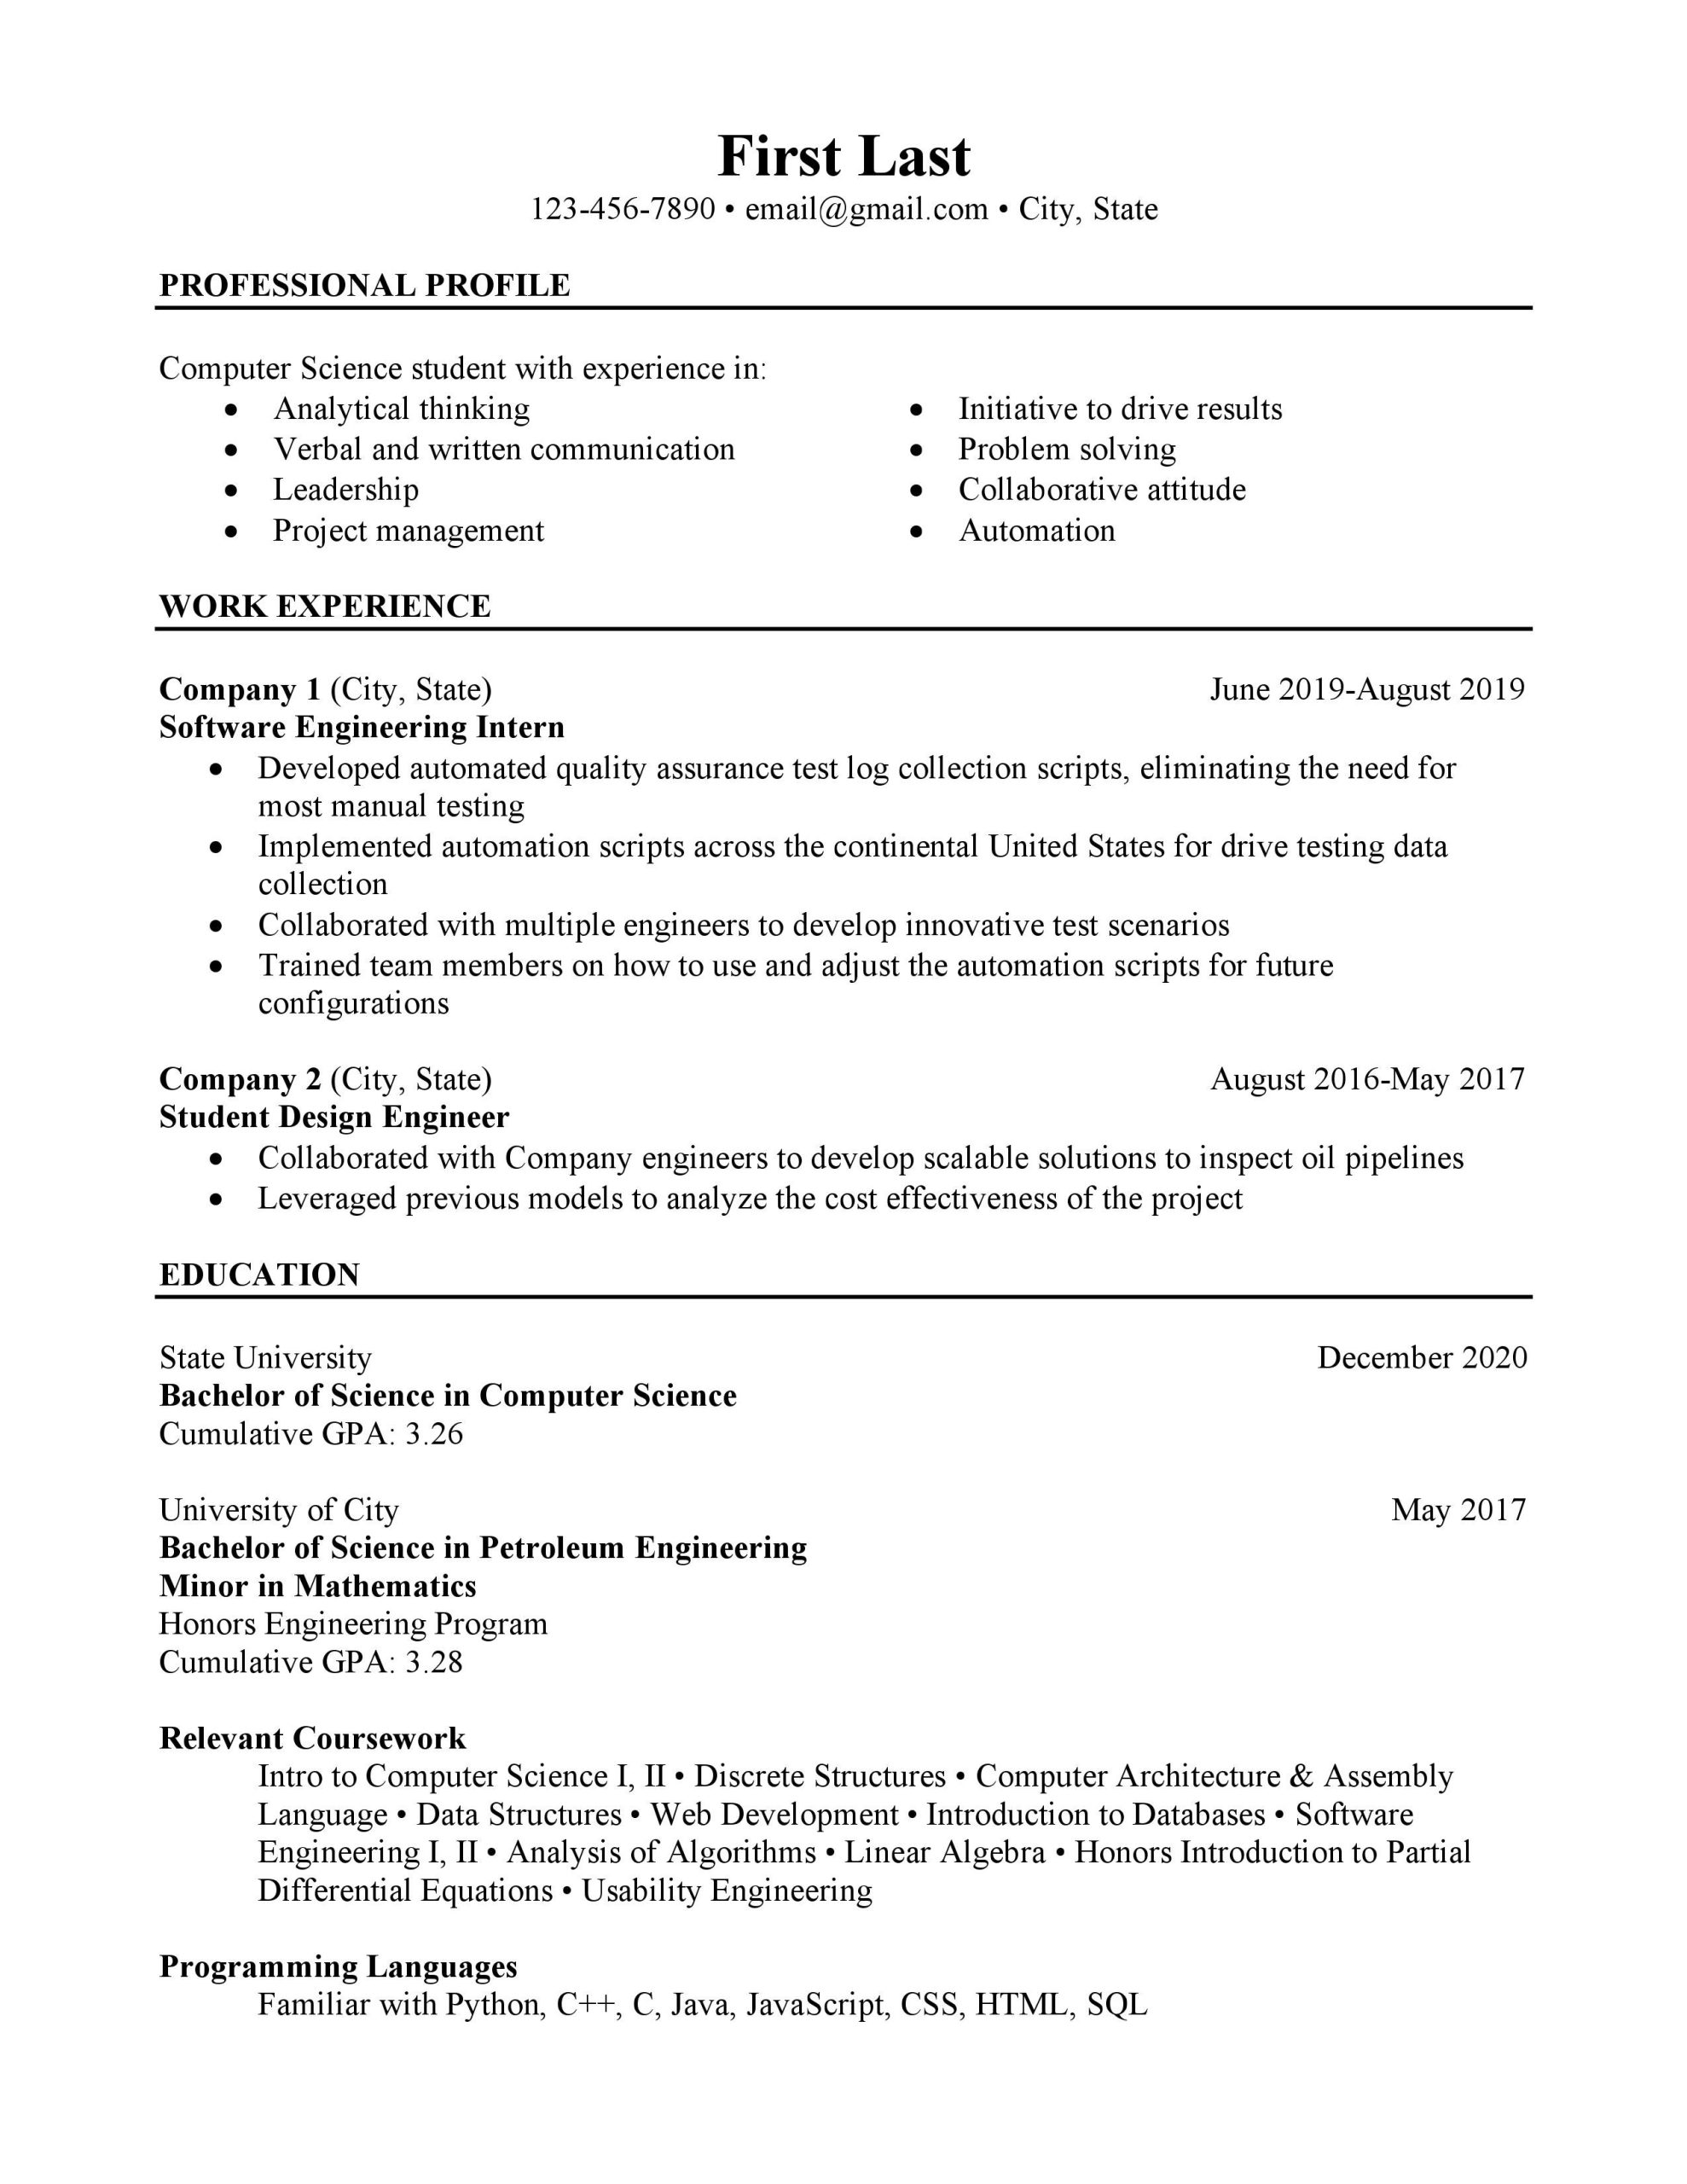 Top Resume Sample Cs Graduate Reddit Computer Science Student Looking to Improve Resume : R/resumes